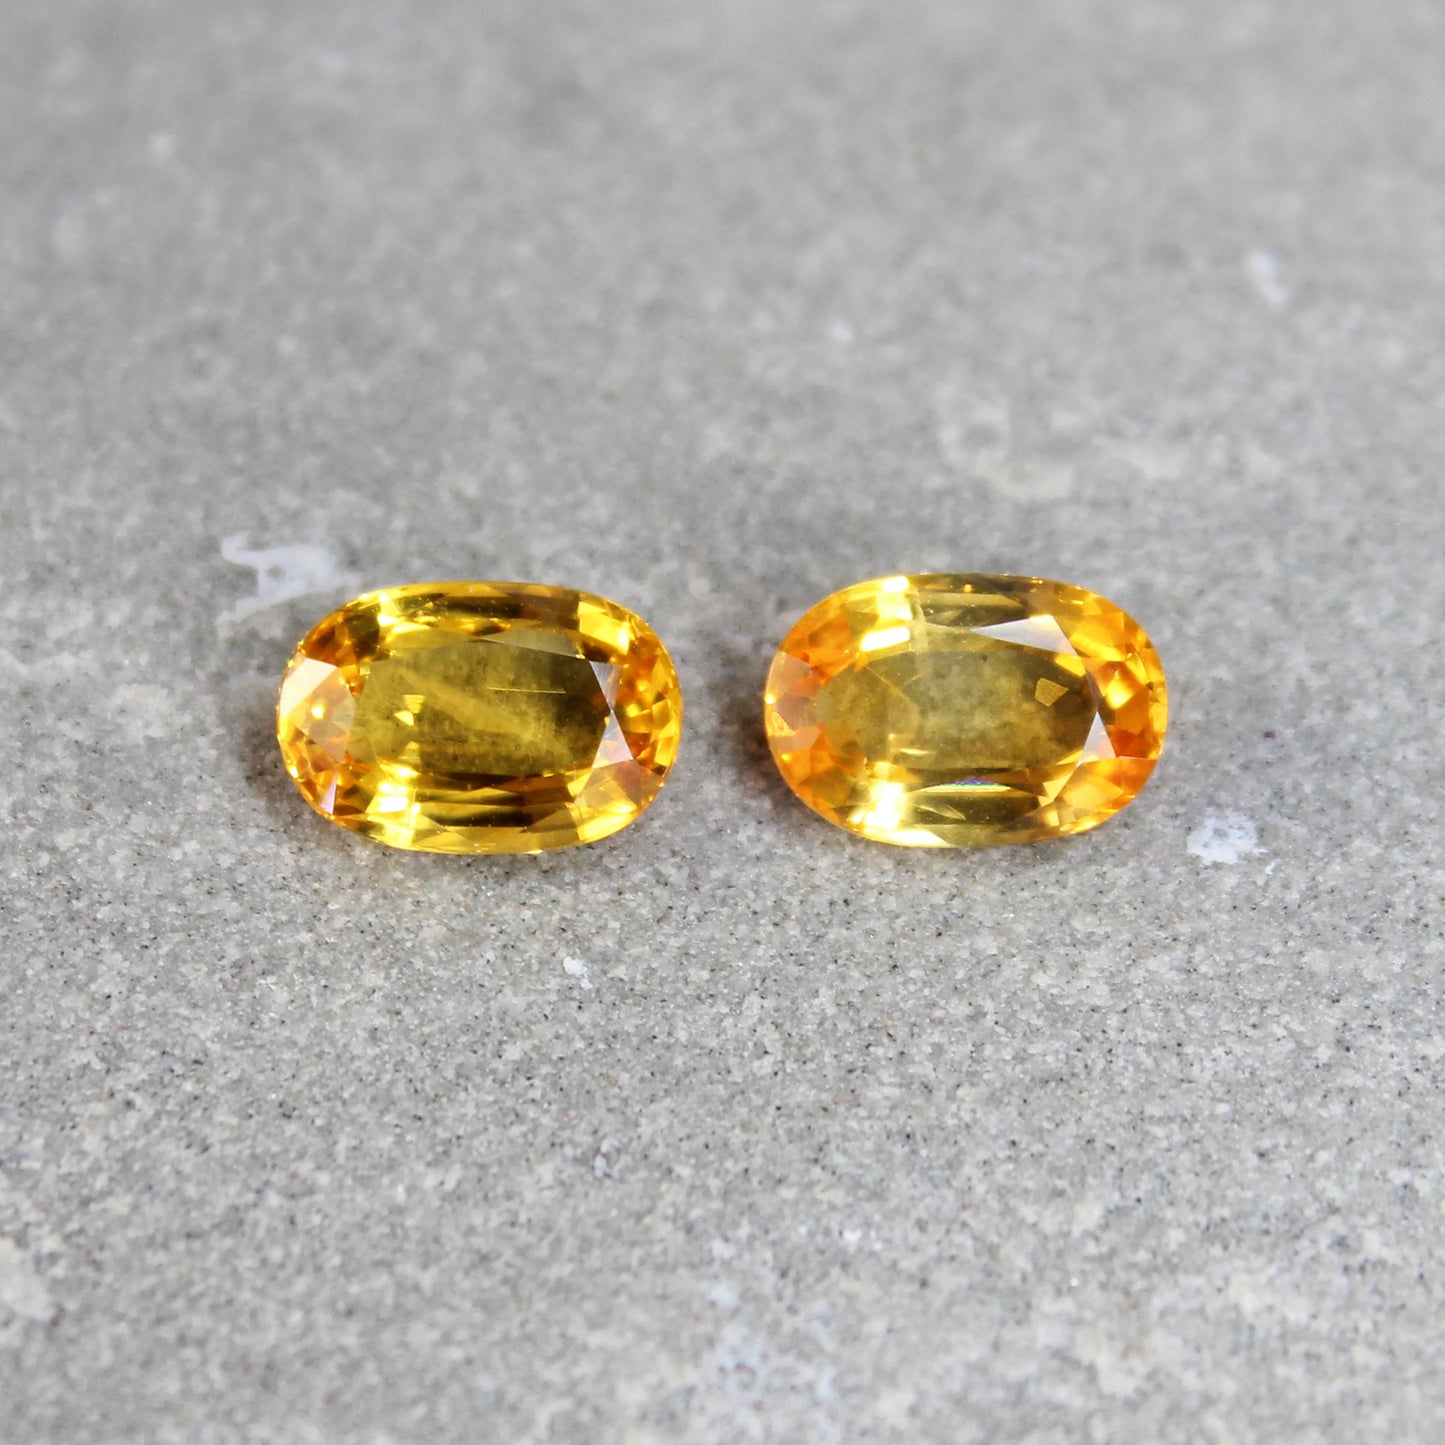 3.15ct Orangy Yellow, Oval Sapphire Pair, Heated, Sri Lanka - 8.3 x 5.7mm